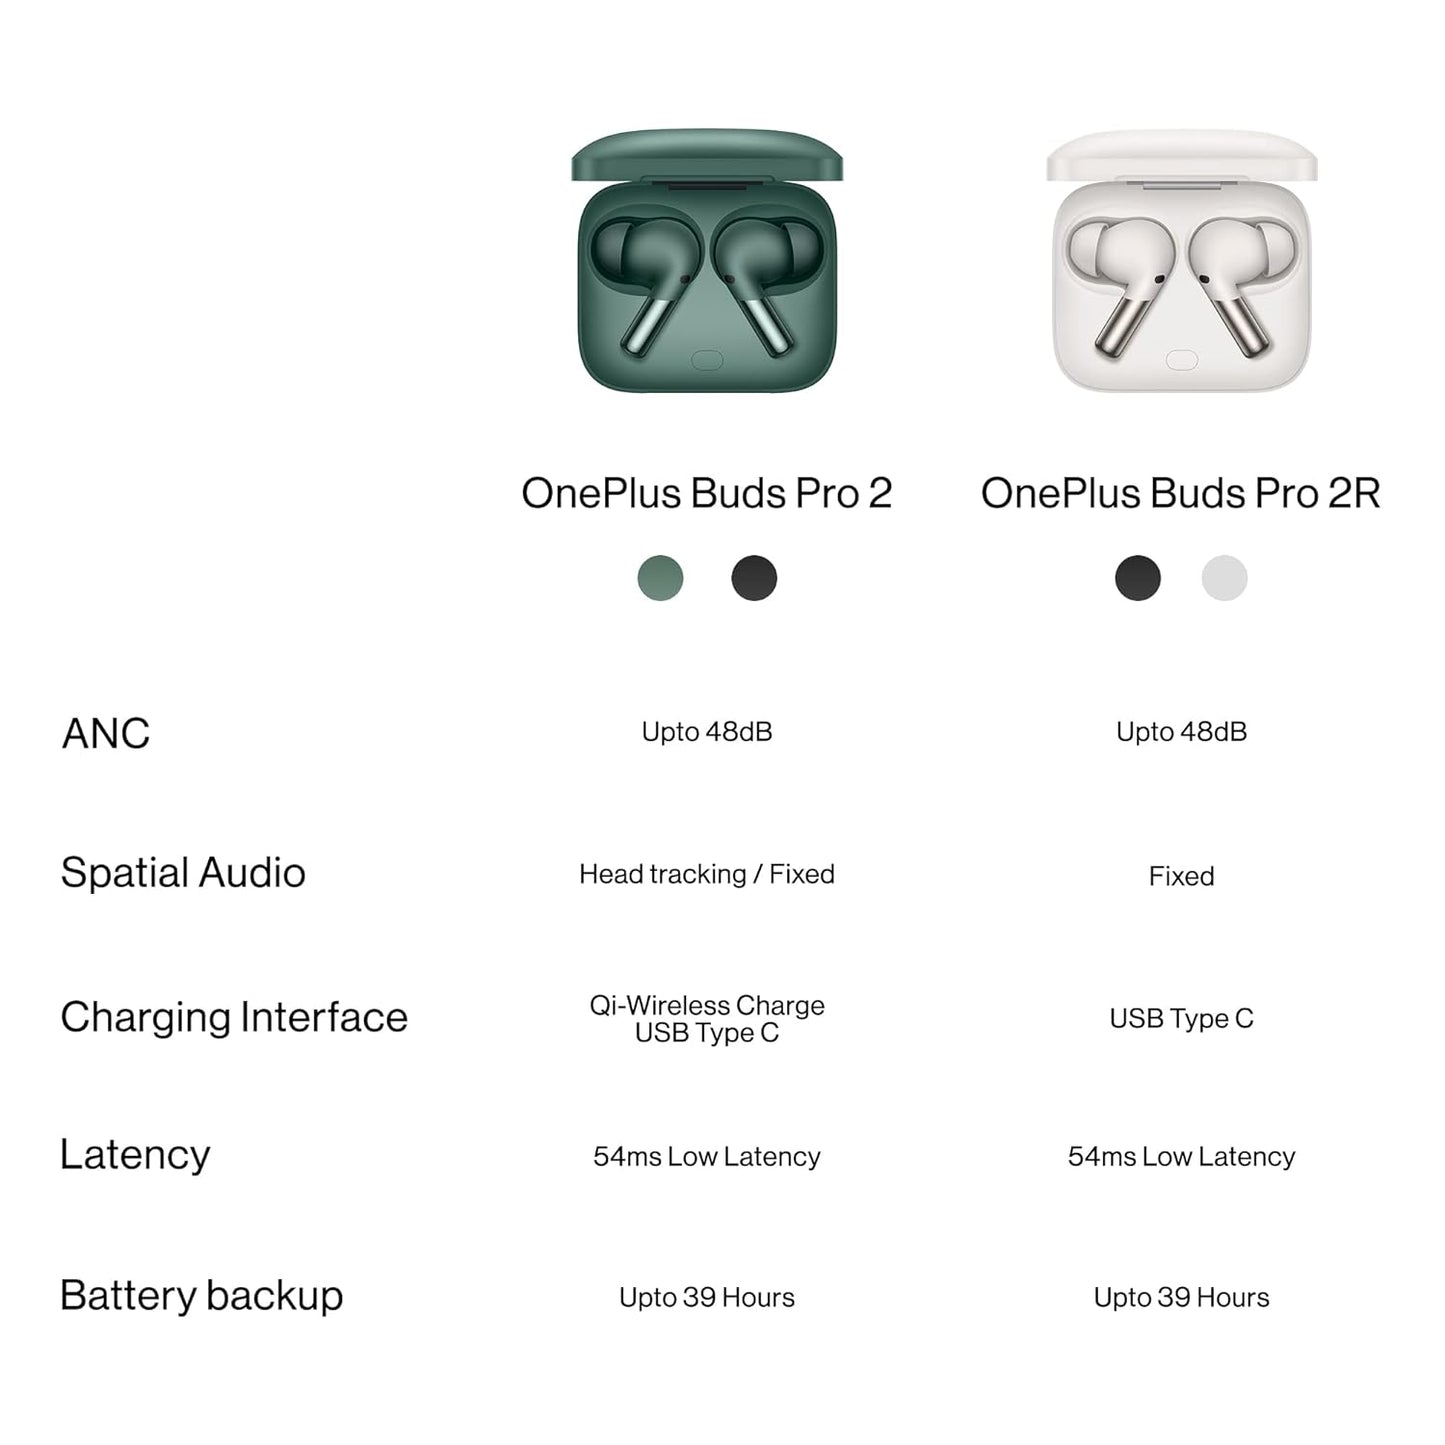 OnePlus Buds Pro 2R (Open-Box)